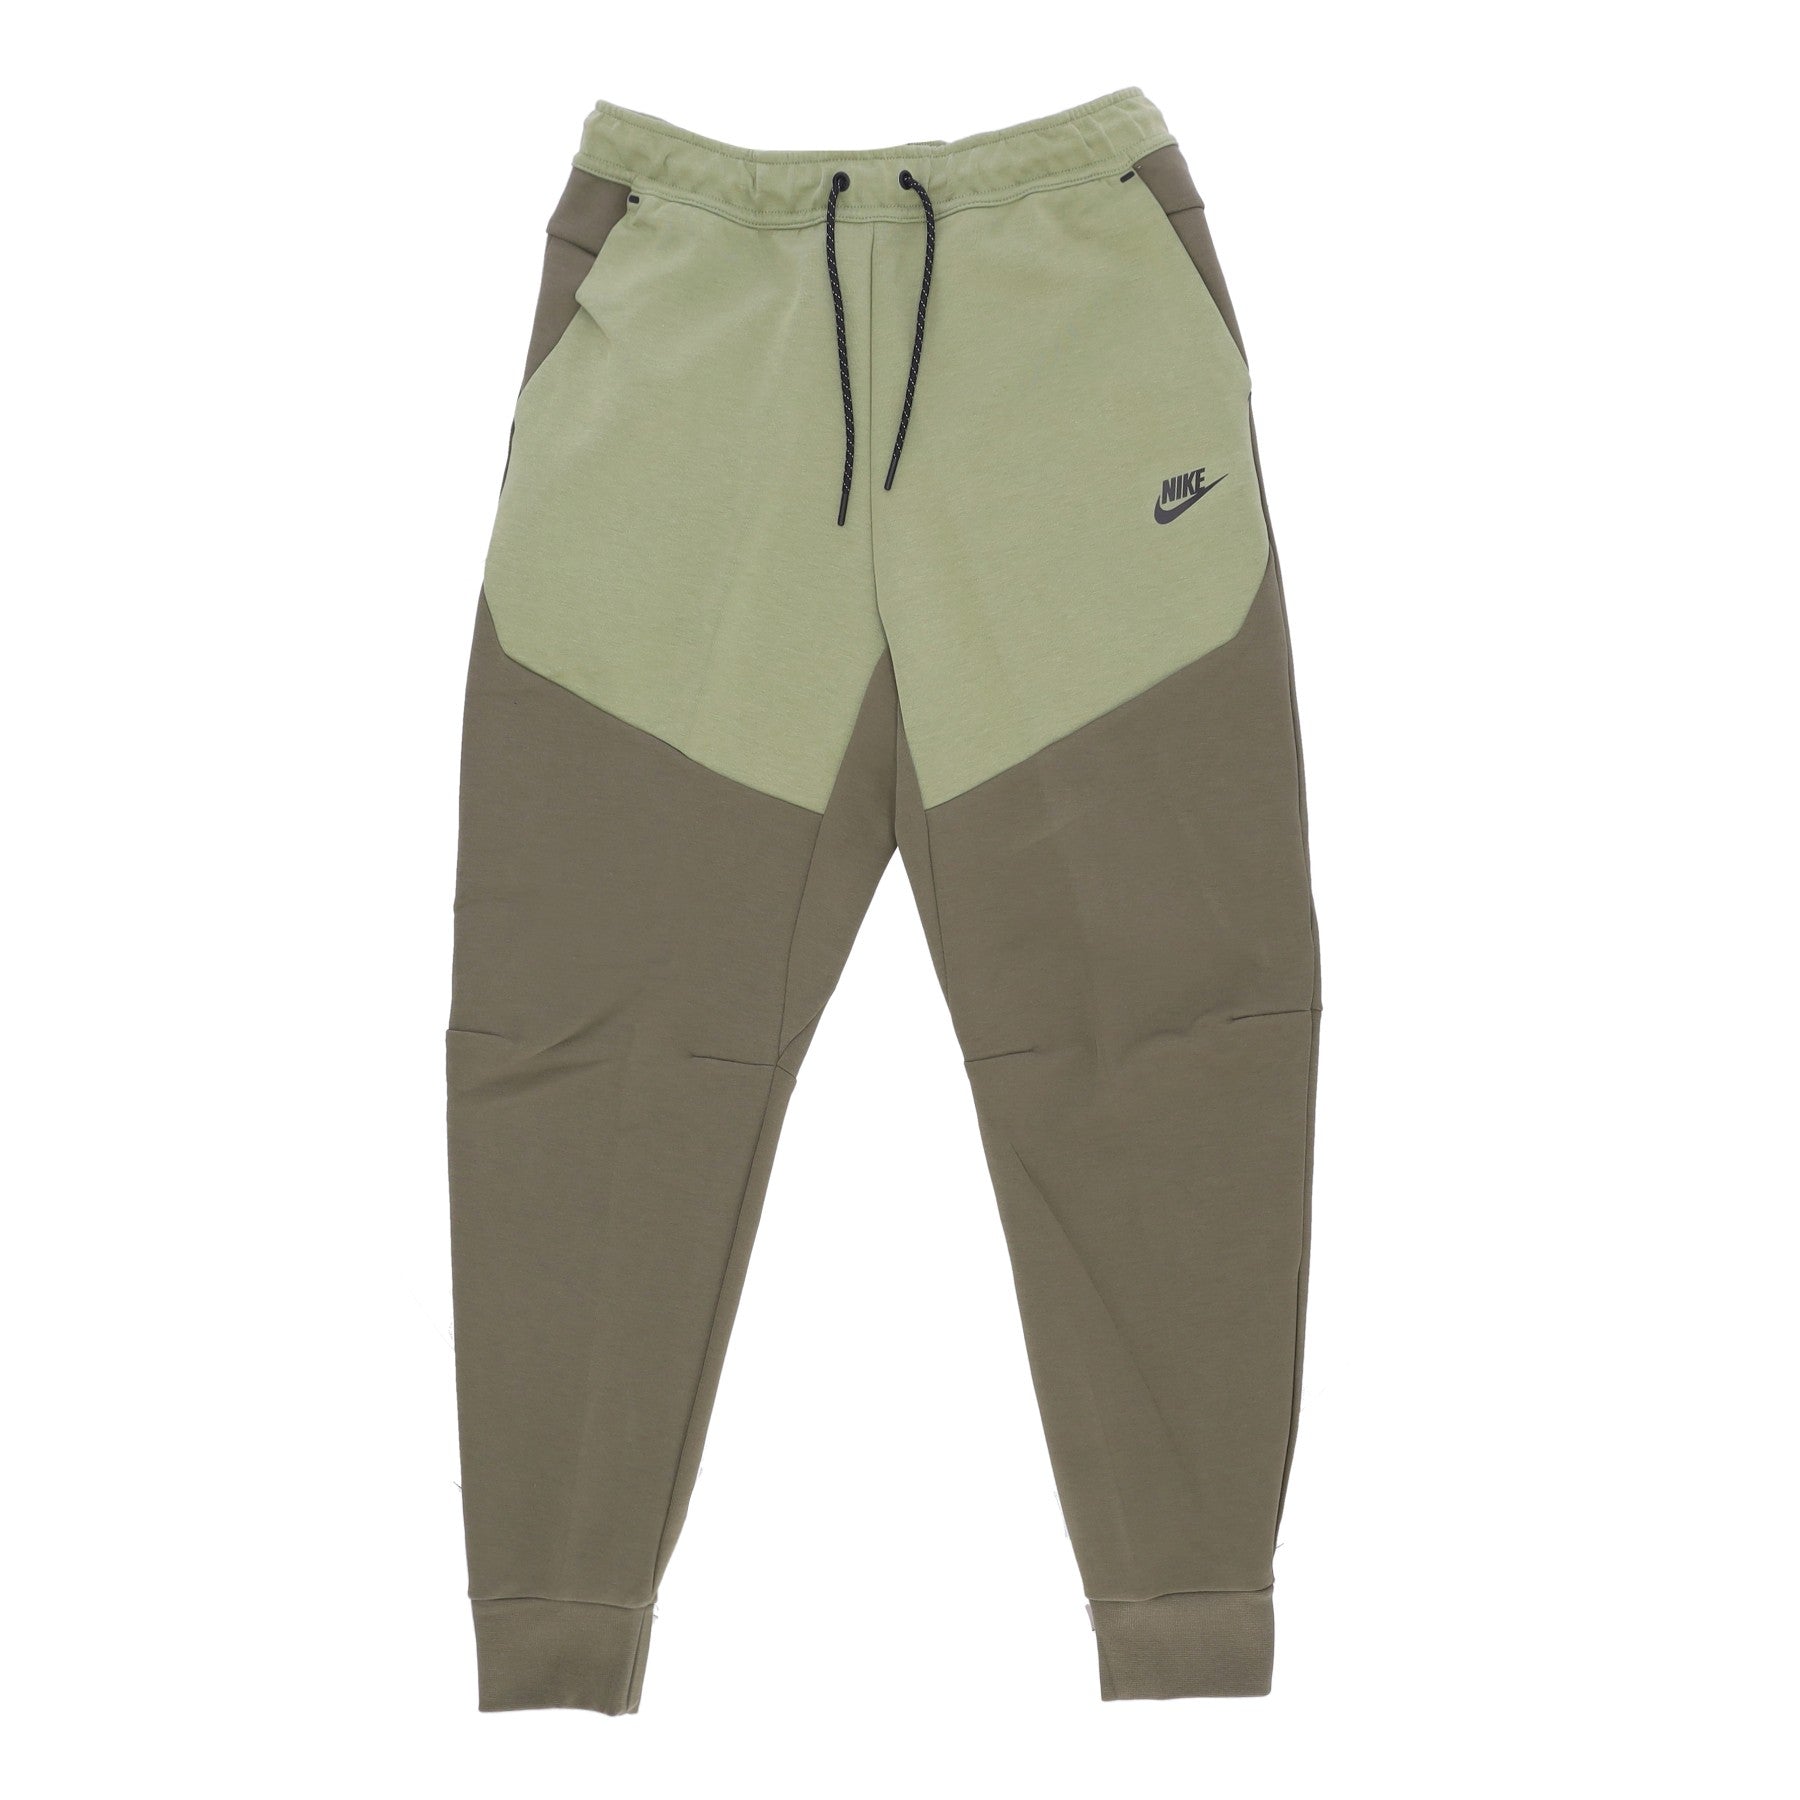 Nike, Pantalone Tuta Leggero Uomo Sportswear Tech Fleece Pant, Medium Olive/alligator/black